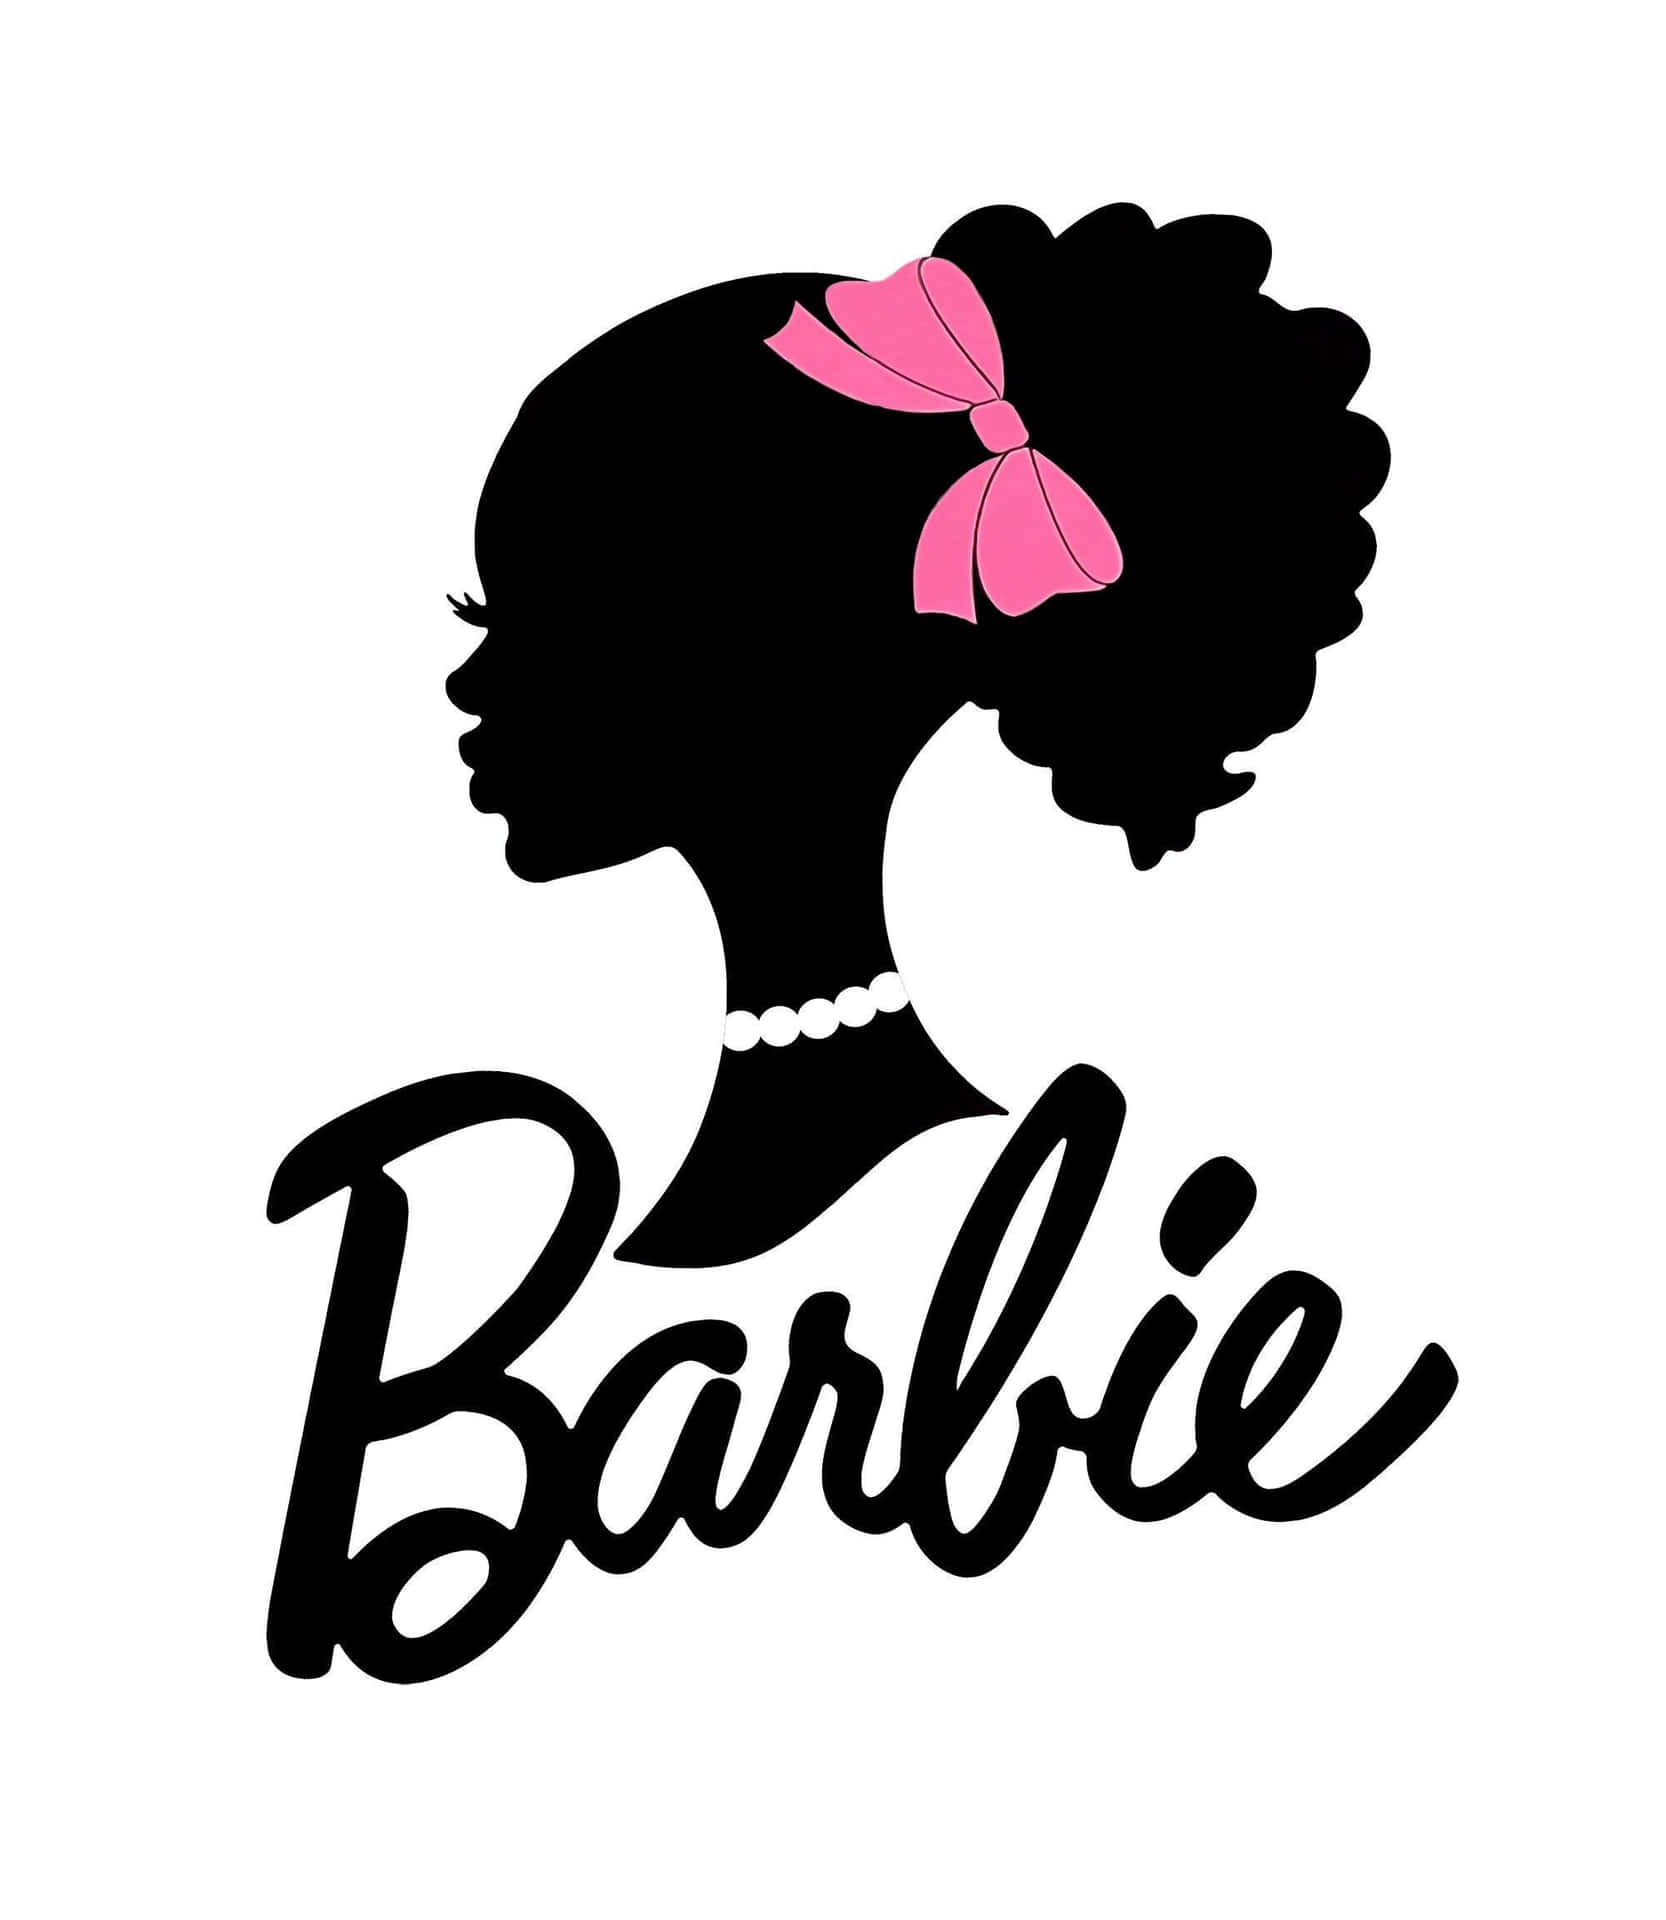 Black Barbie Silhouette Graphic Wallpaper